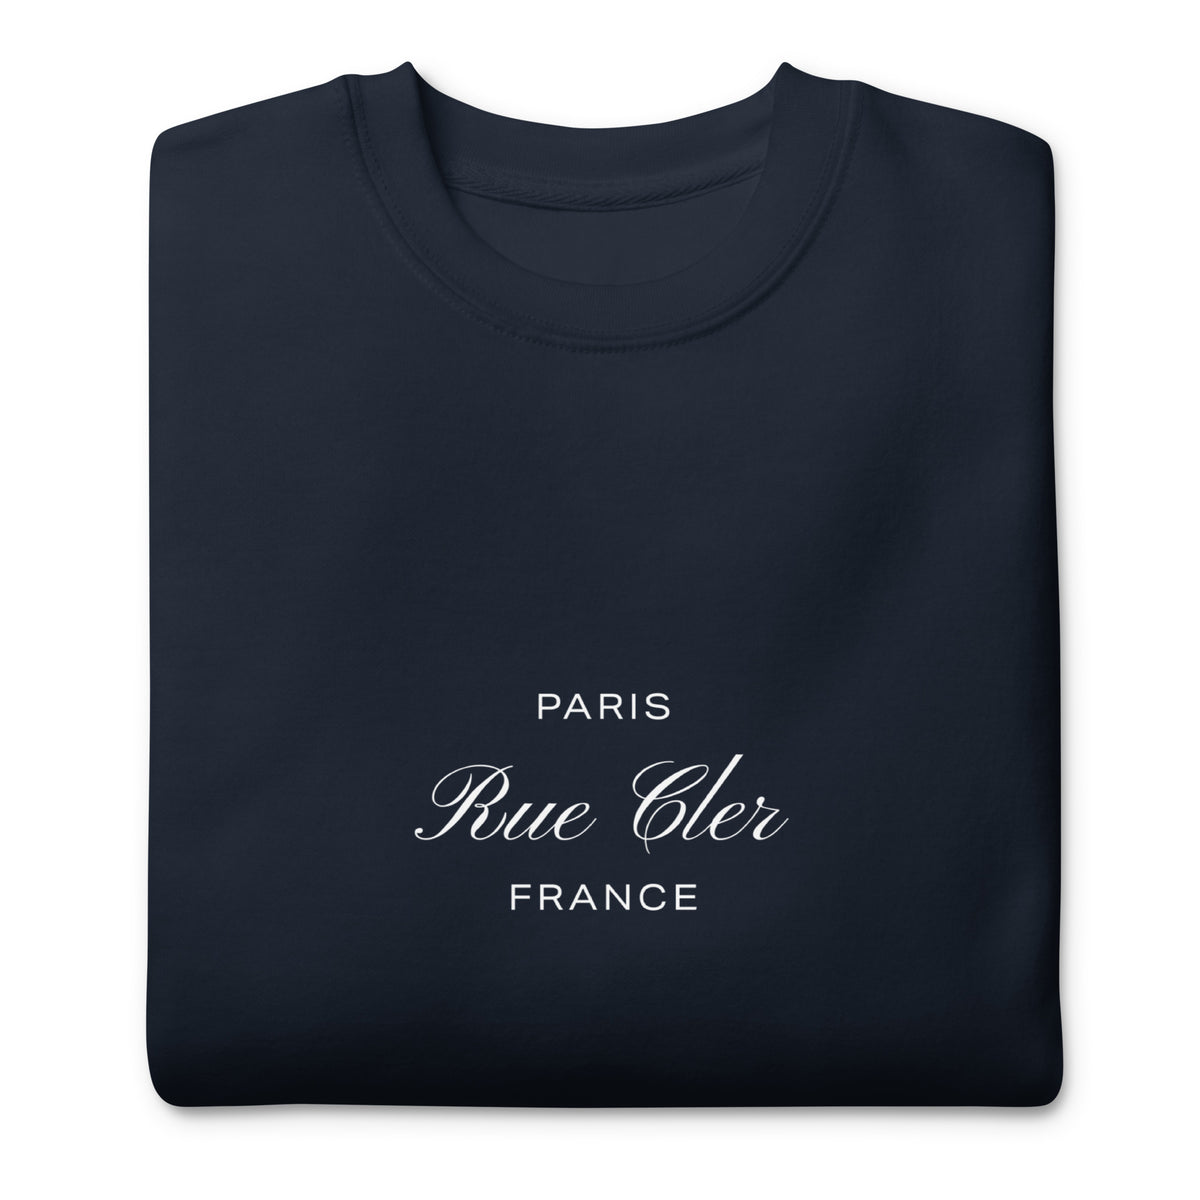 Rue Cler Paris Navy Sweatshirt